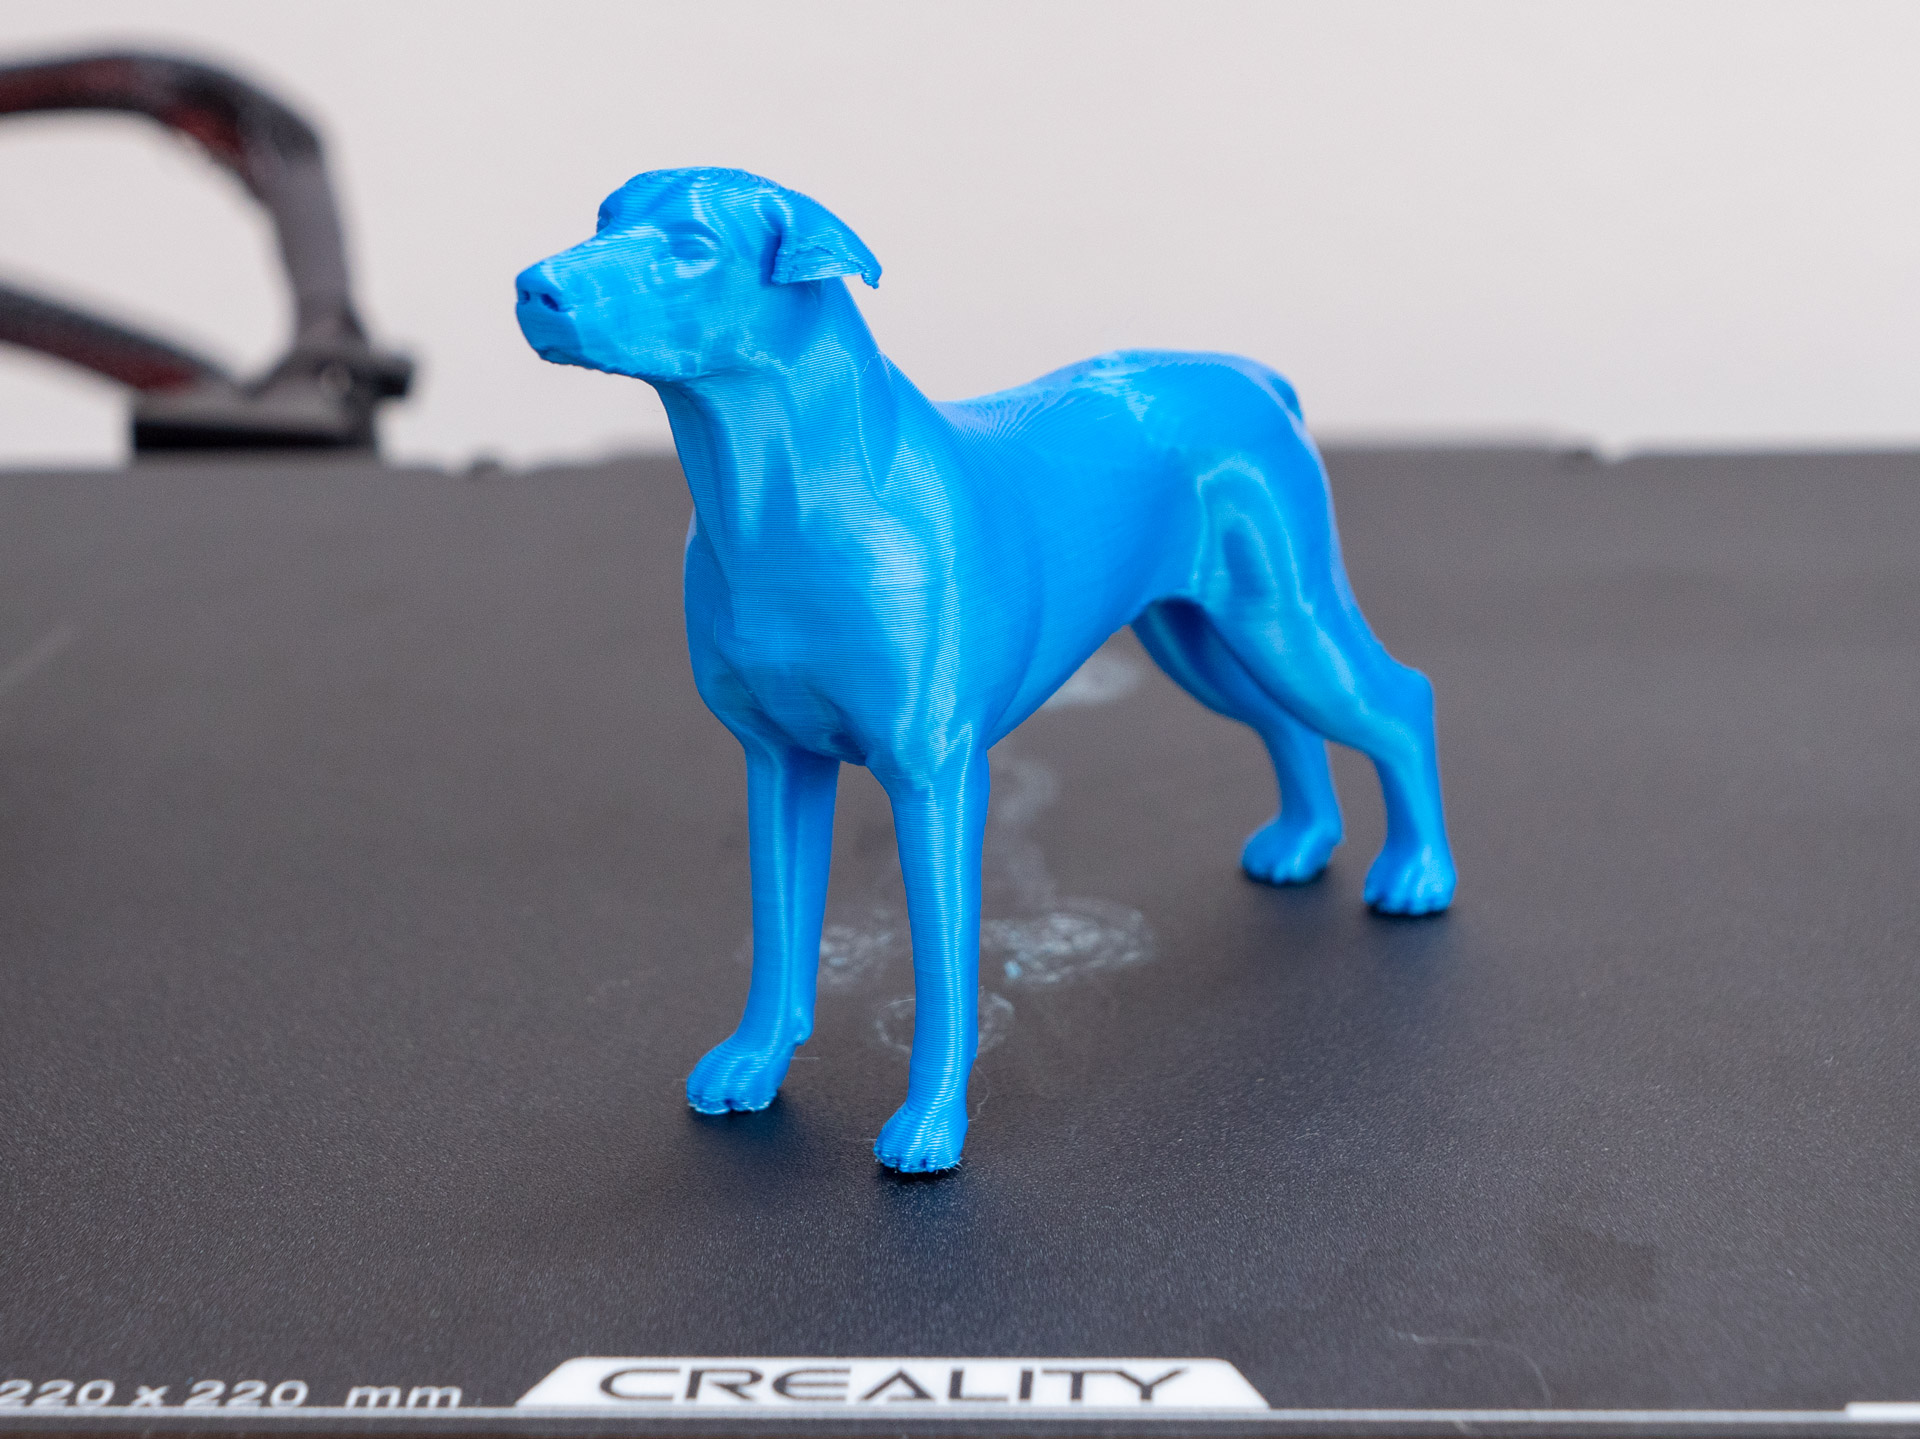 Get the Creality Ender-3 V3 SE 3D Printer (220*220*250mm Printing